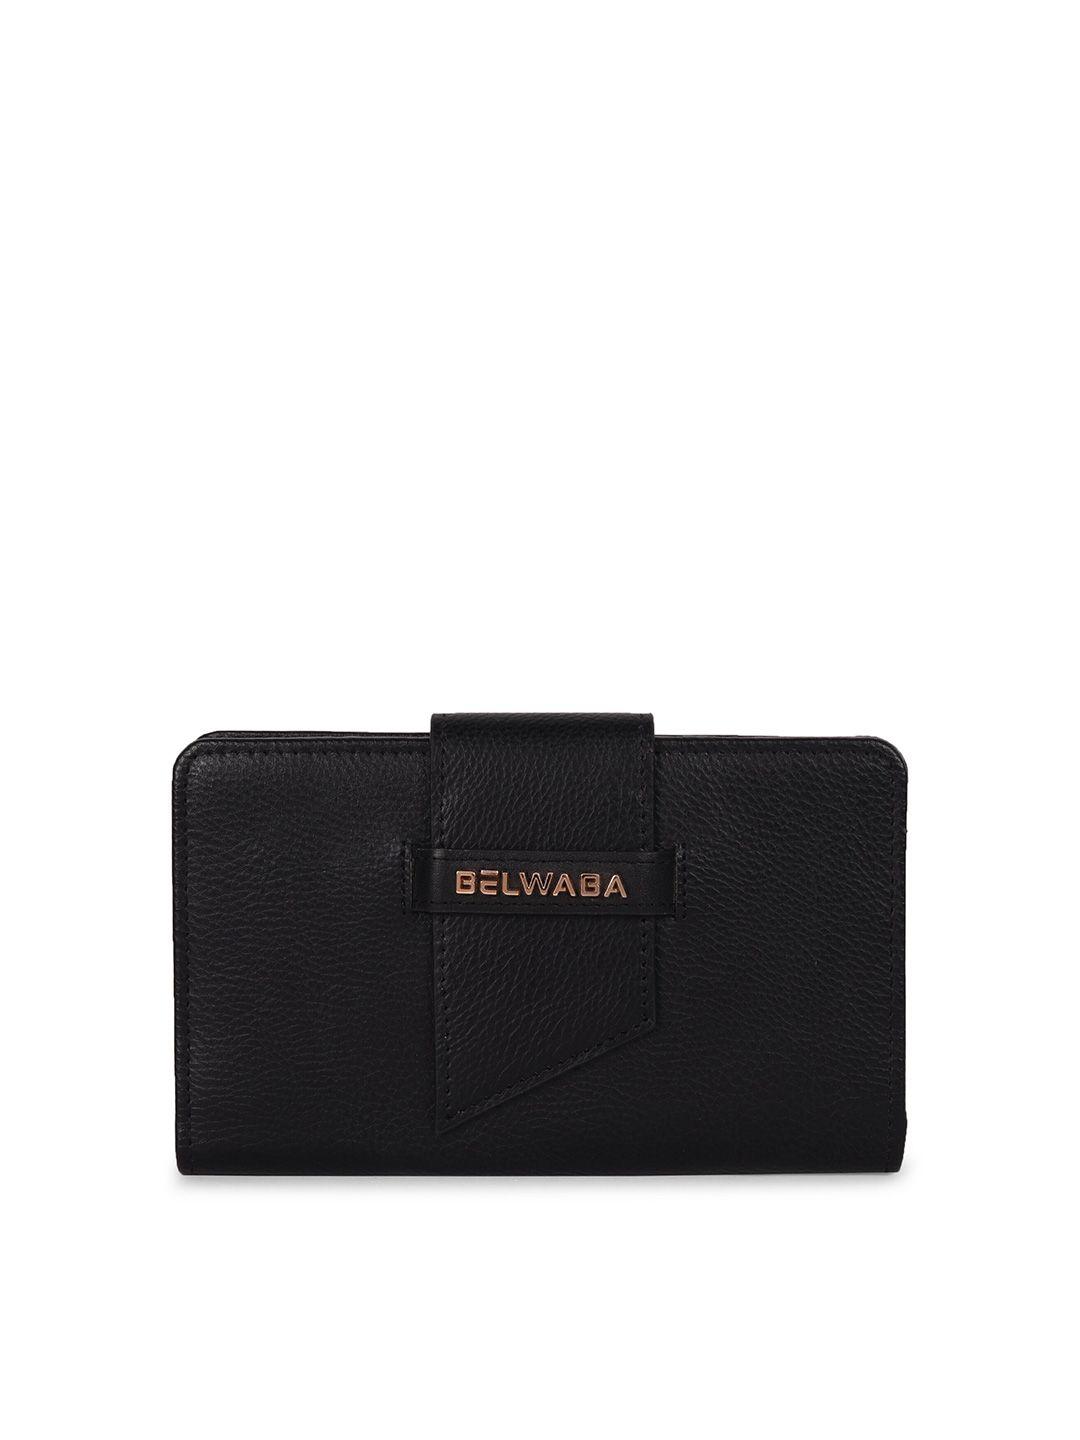 belwaba-women-black-textured-pu-card-holder